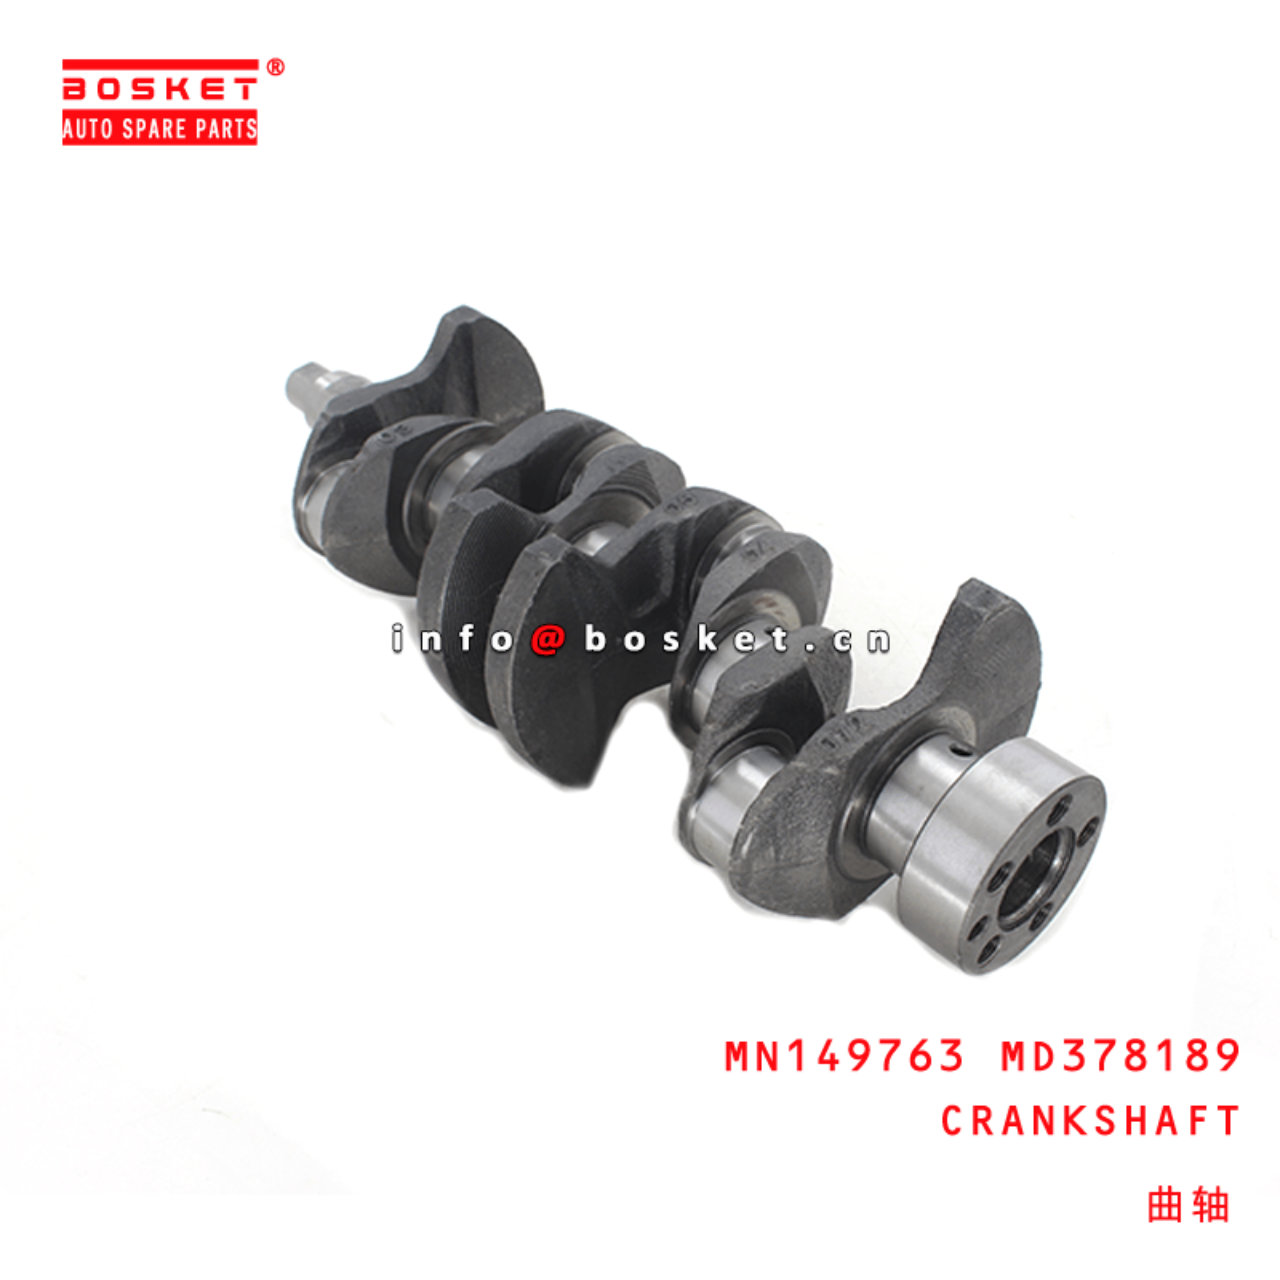  MN149763 MD378189 Crankshaft Suitable For MITSUBISHI FUSO 4G13 